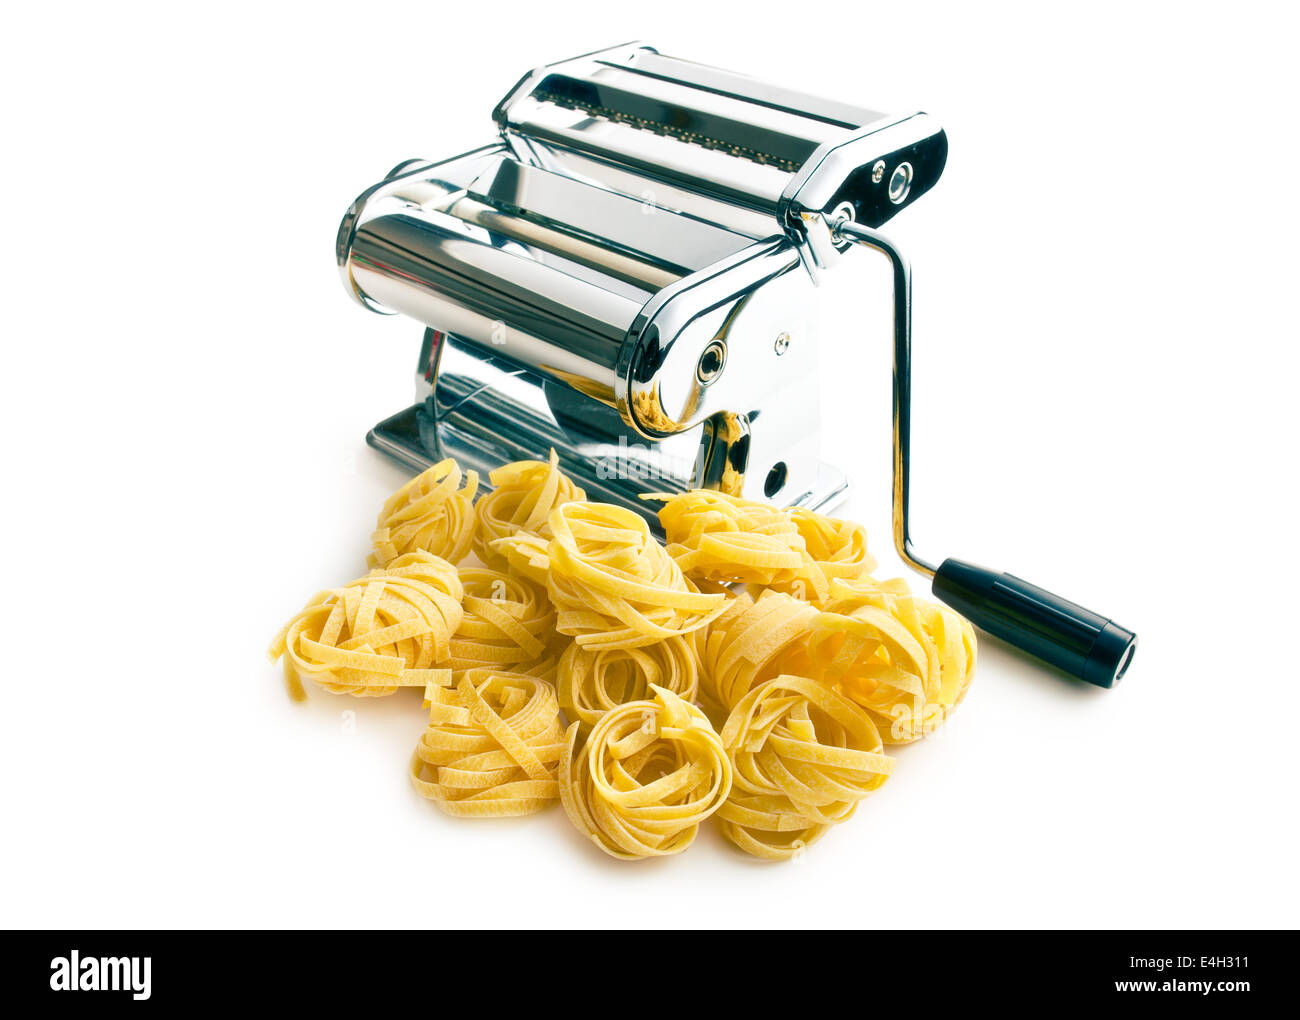 https://c8.alamy.com/comp/E4H311/tagliatelle-pasta-machine-on-white-background-E4H311.jpg